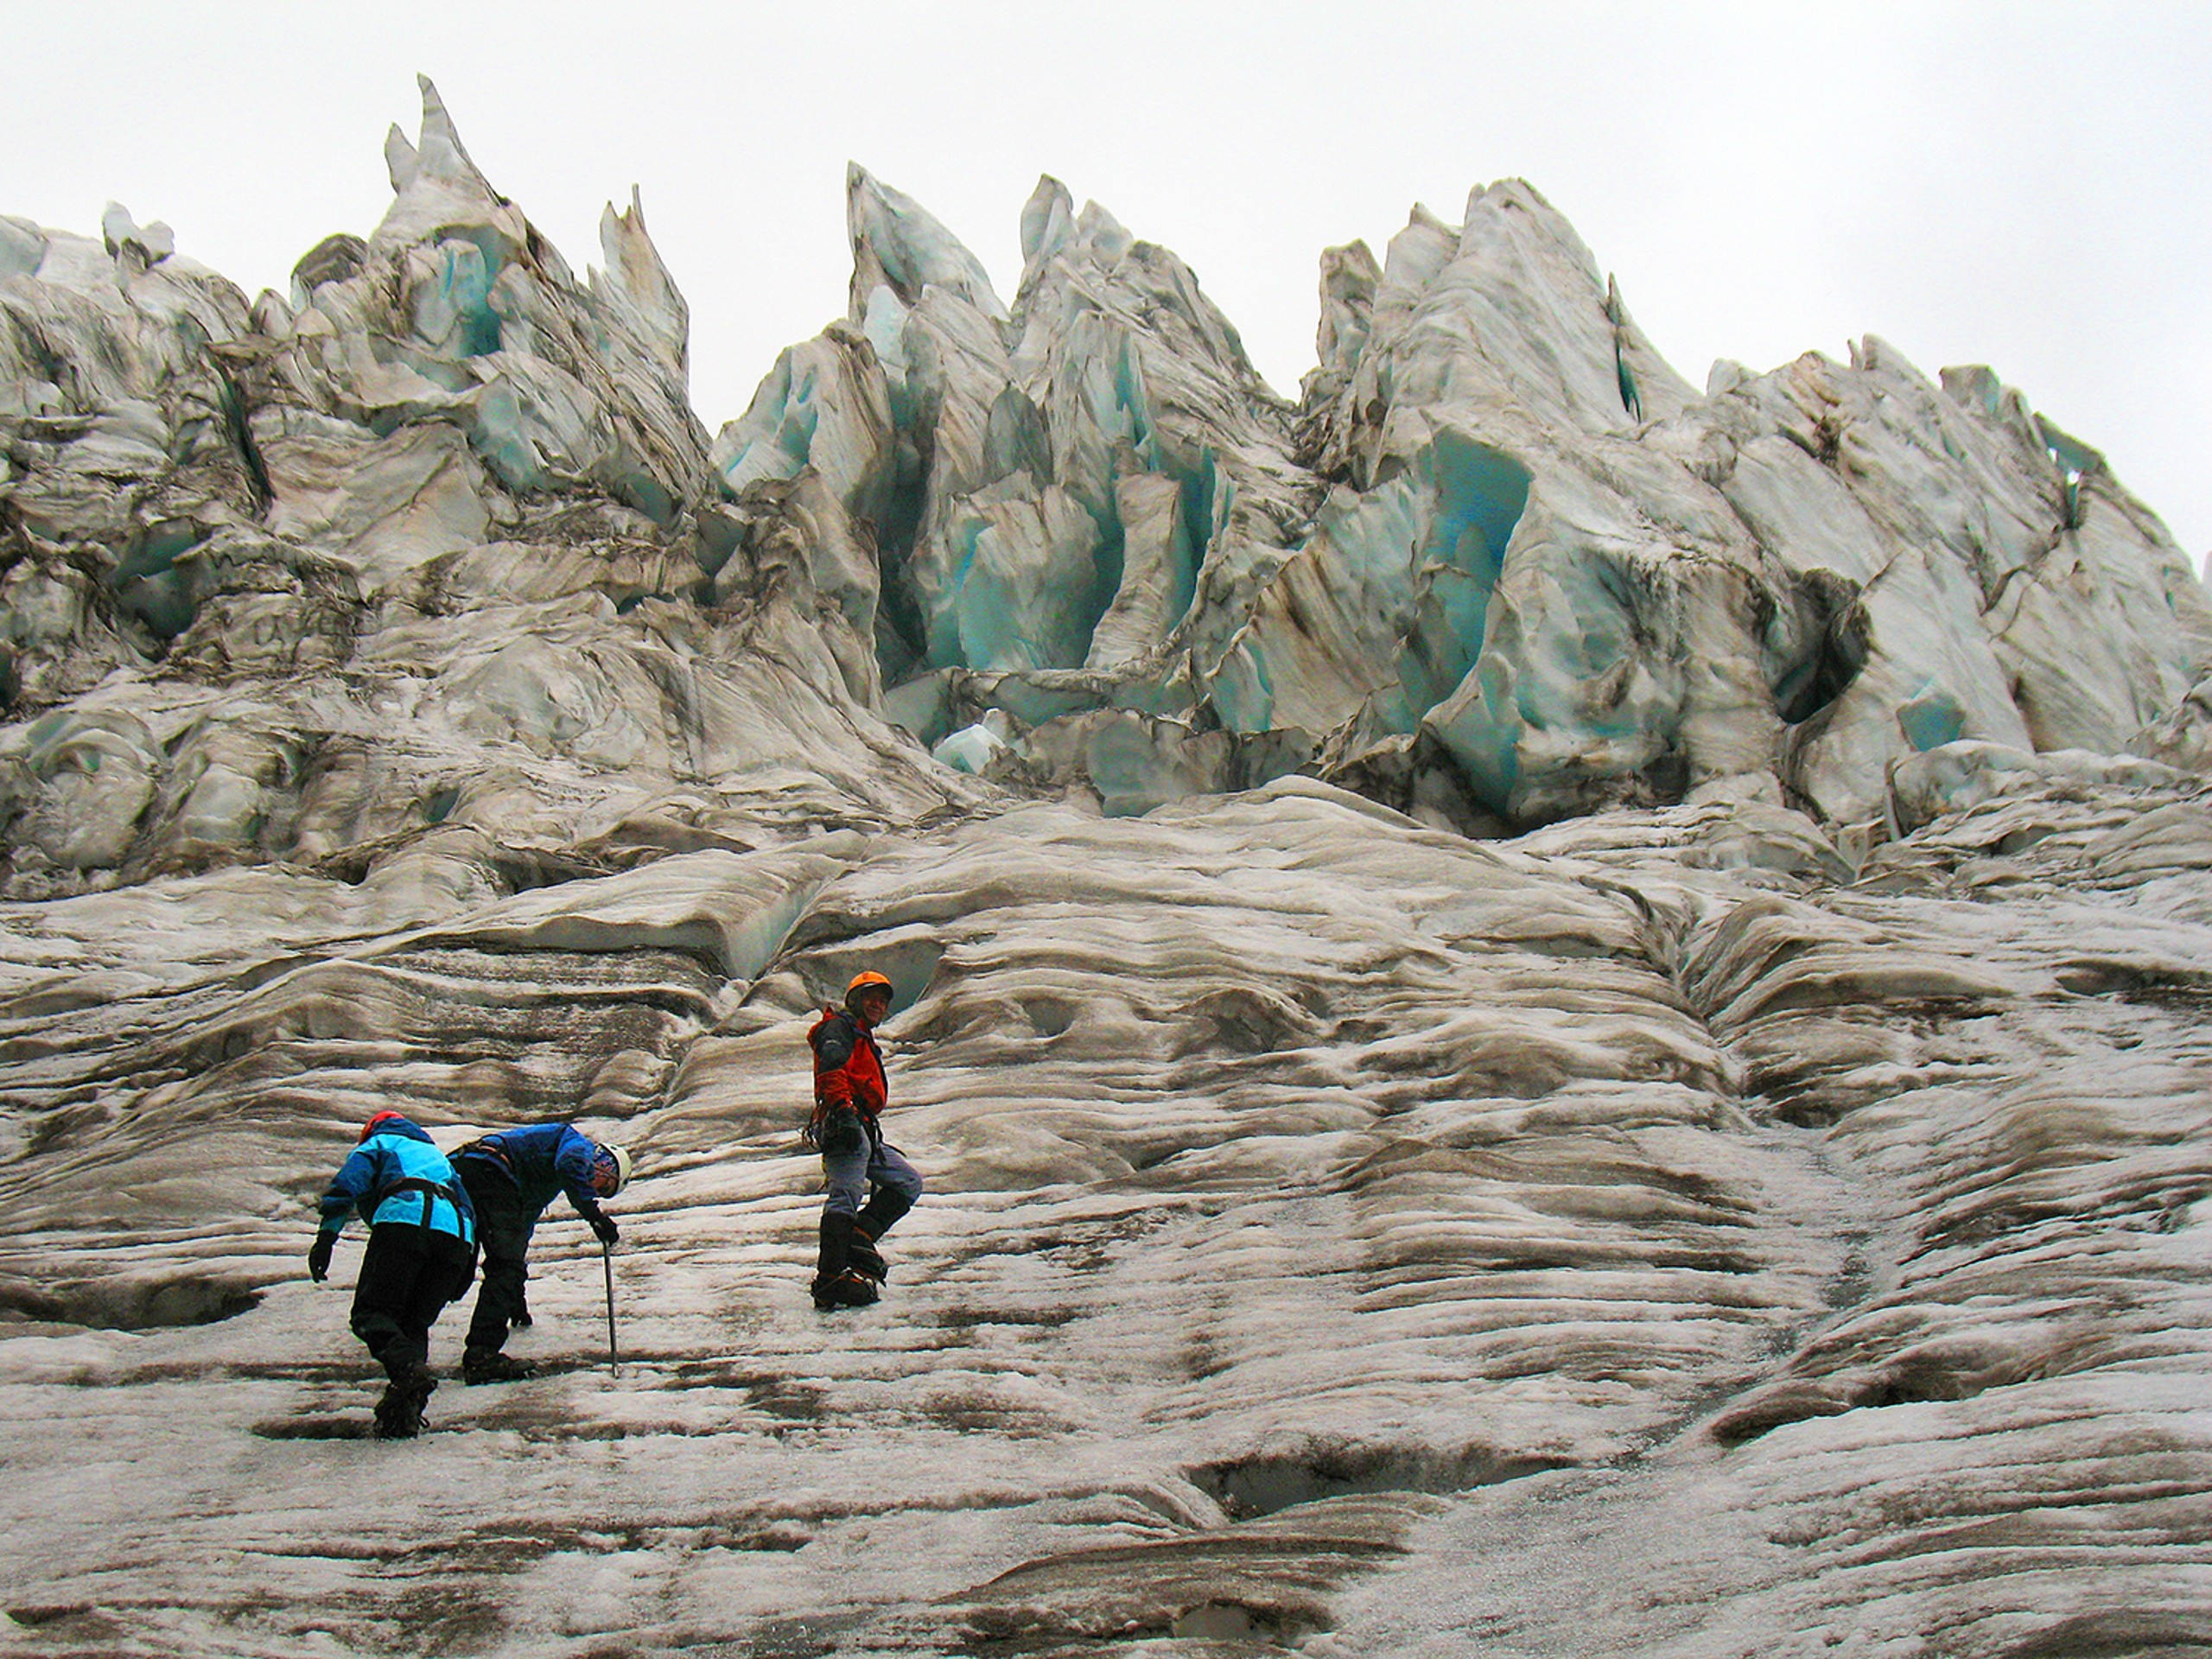 Climbers in Ecuador below icy formations